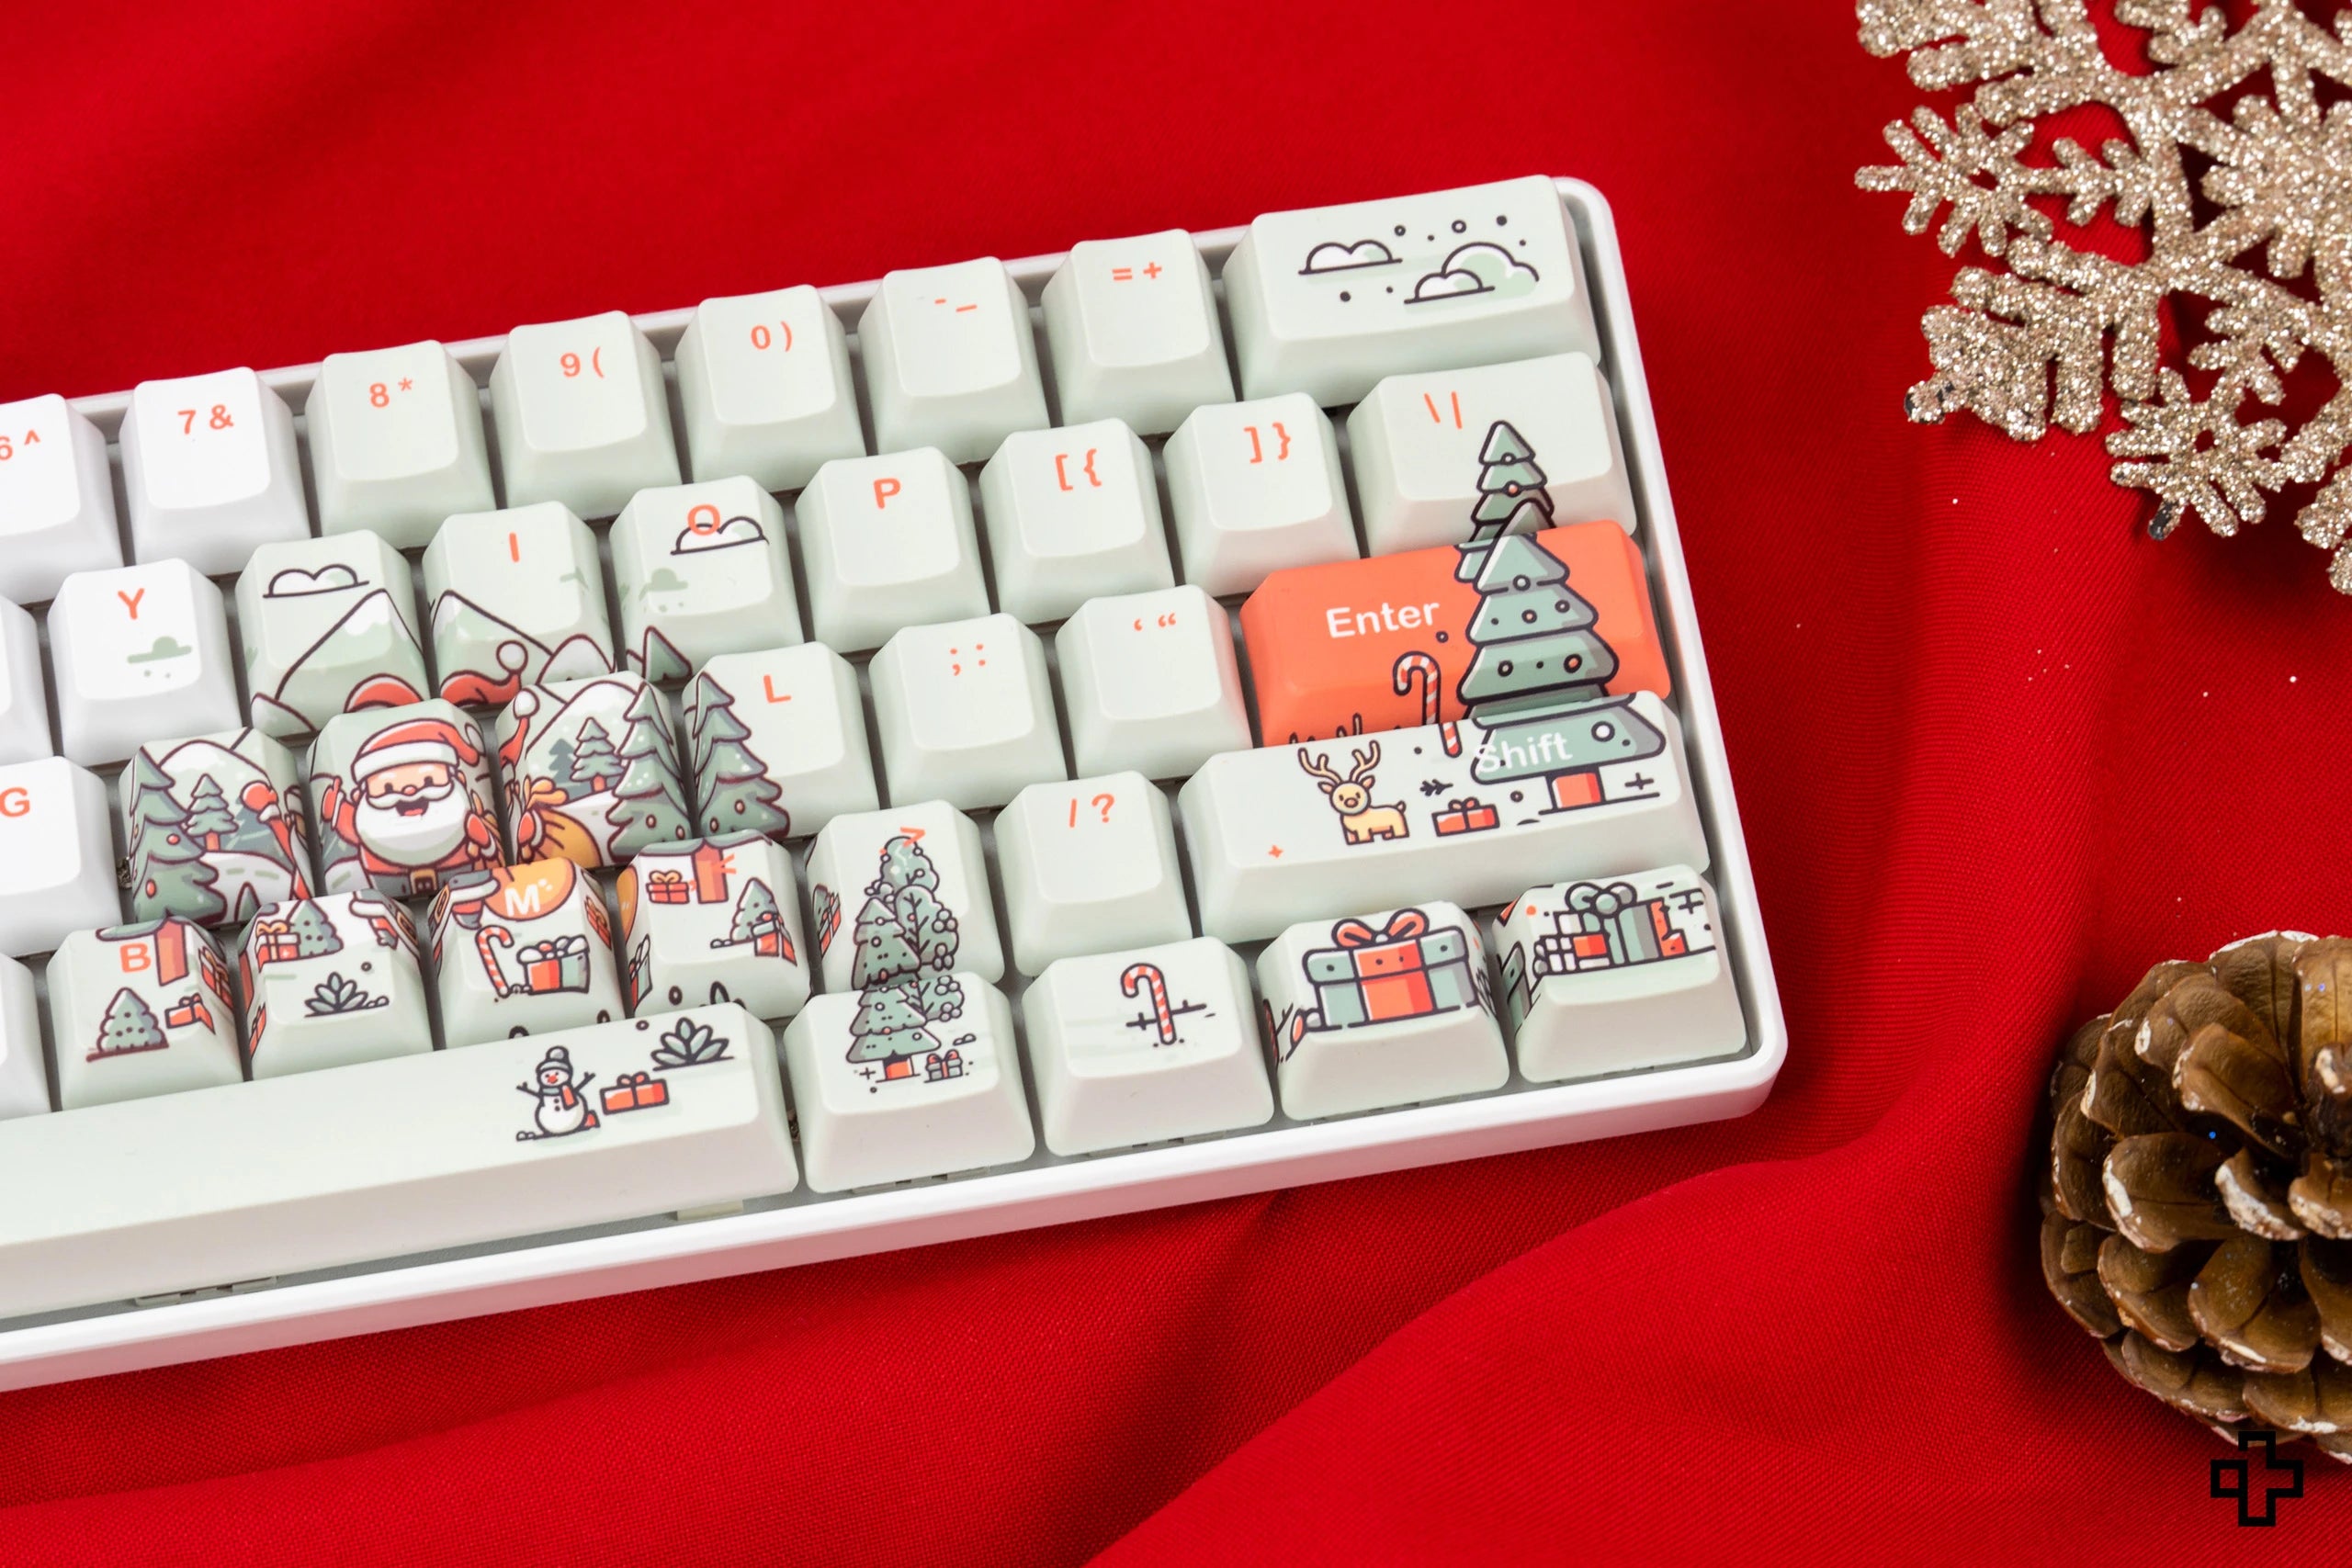 QwertyKey Santa Hotswap Mechanical Christmas Gaming Keyboard